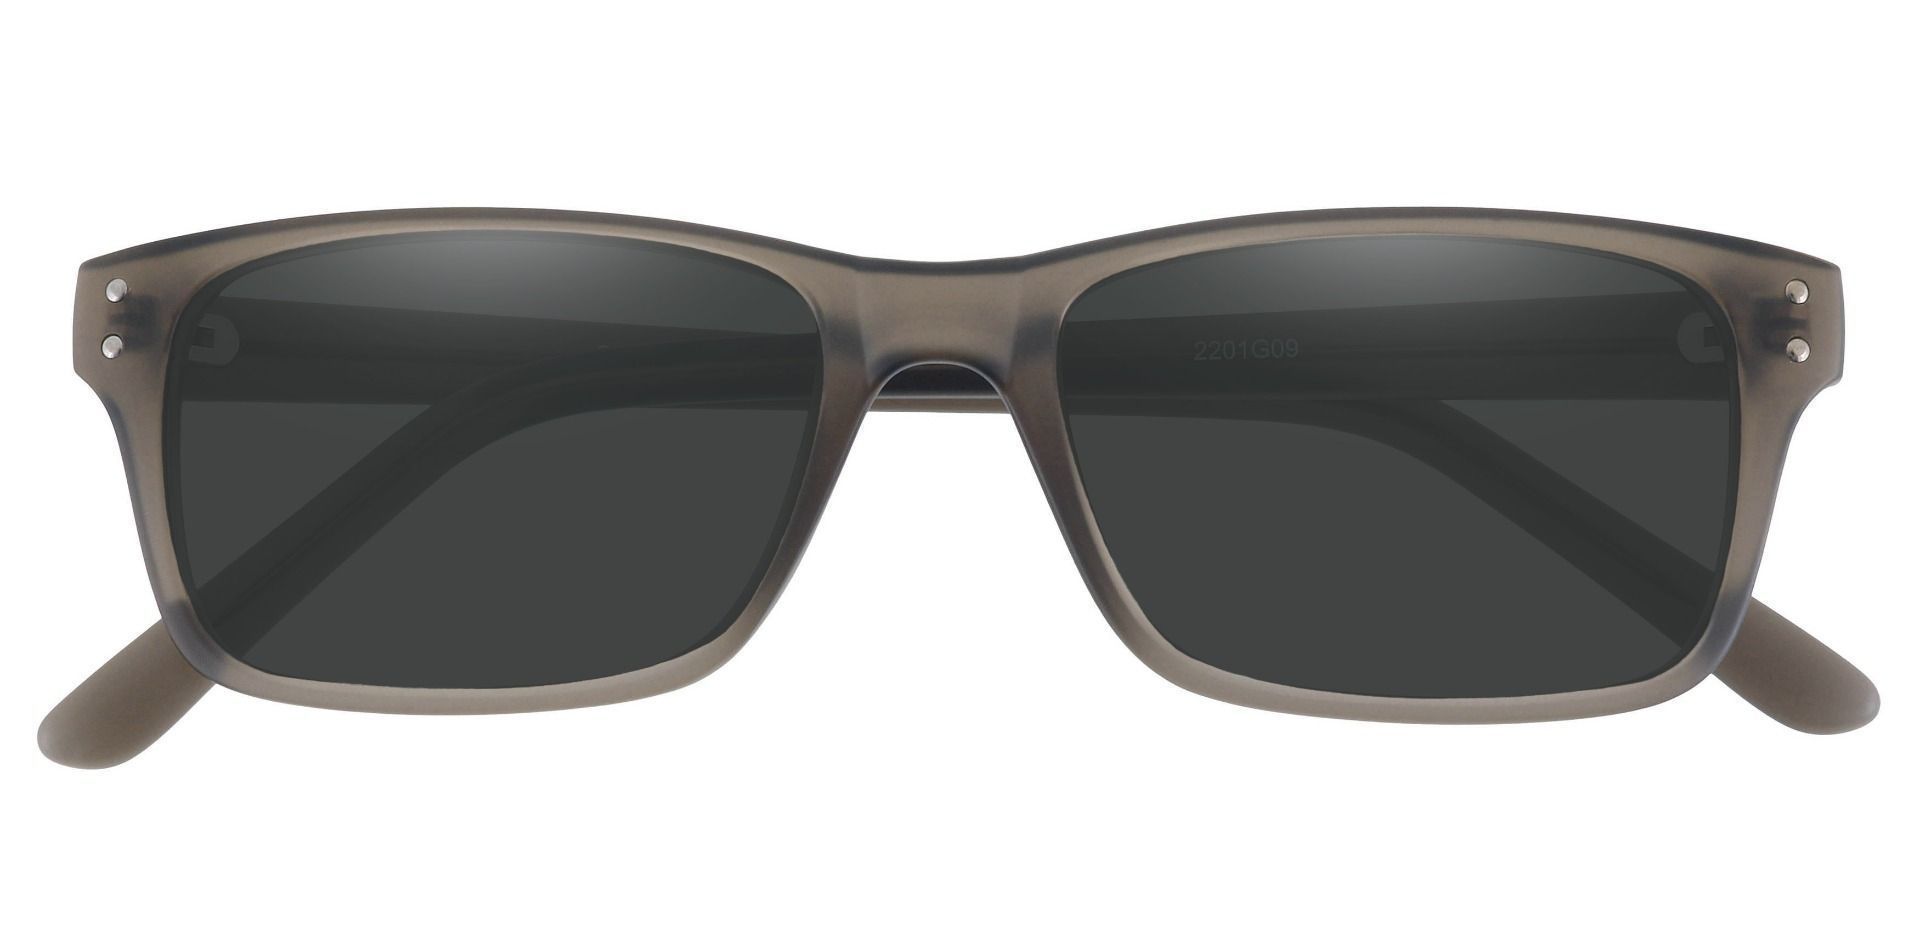 Fabian Rectangle Prescription Sunglasses - Gray Frame With Gray Lenses